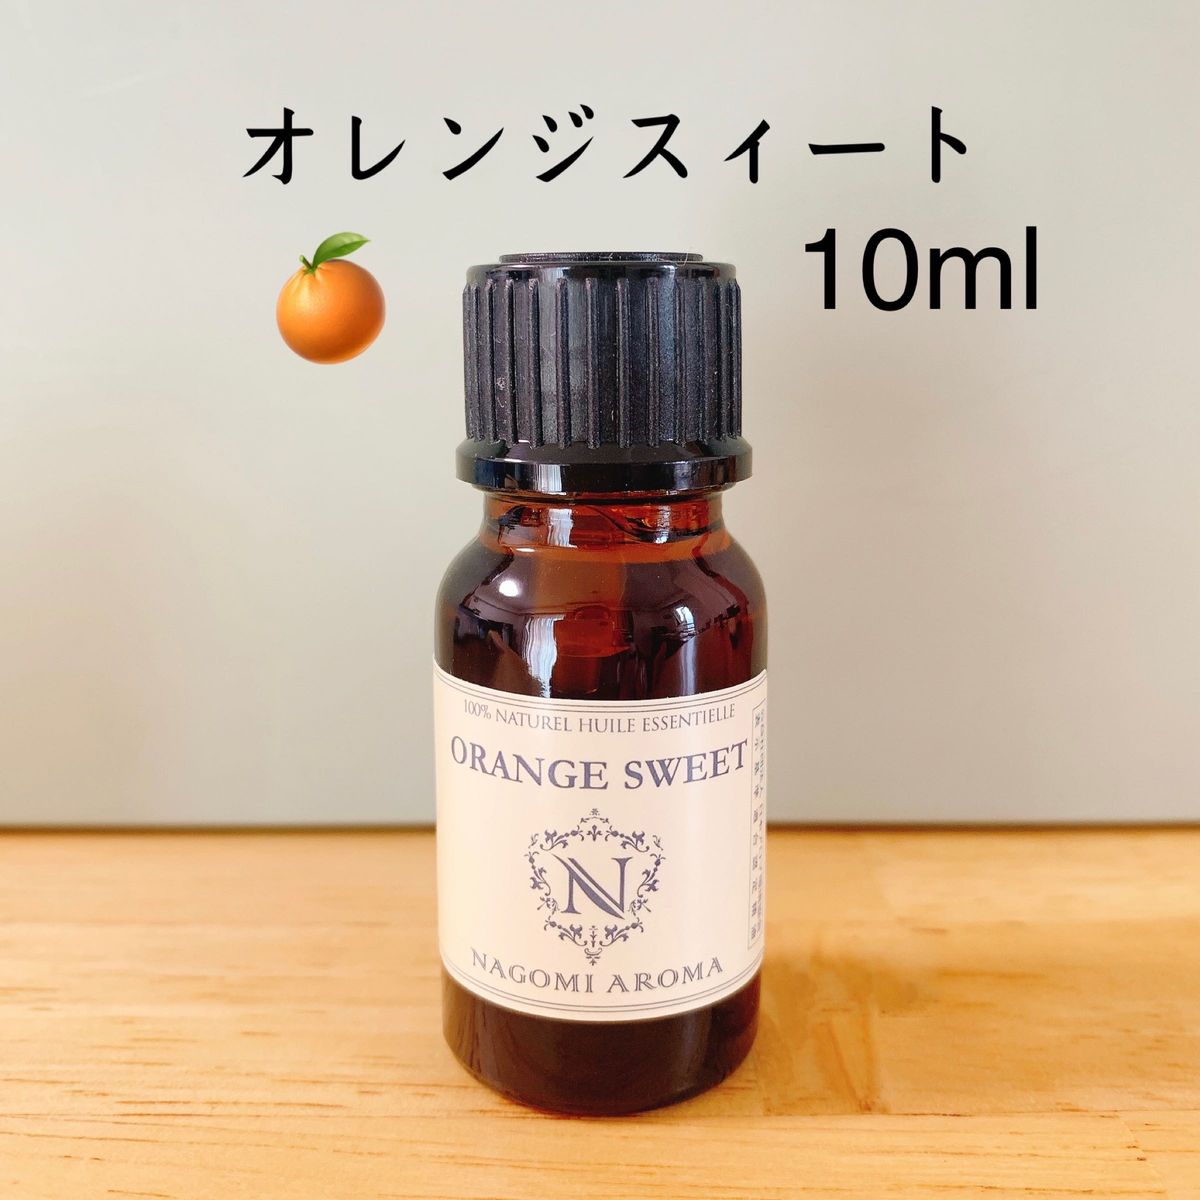 【10ml 】2個　100%天然　AEAJ認定 精油 オレンジ　アロマオイル　エッセンシャルオイル　柑橘系　